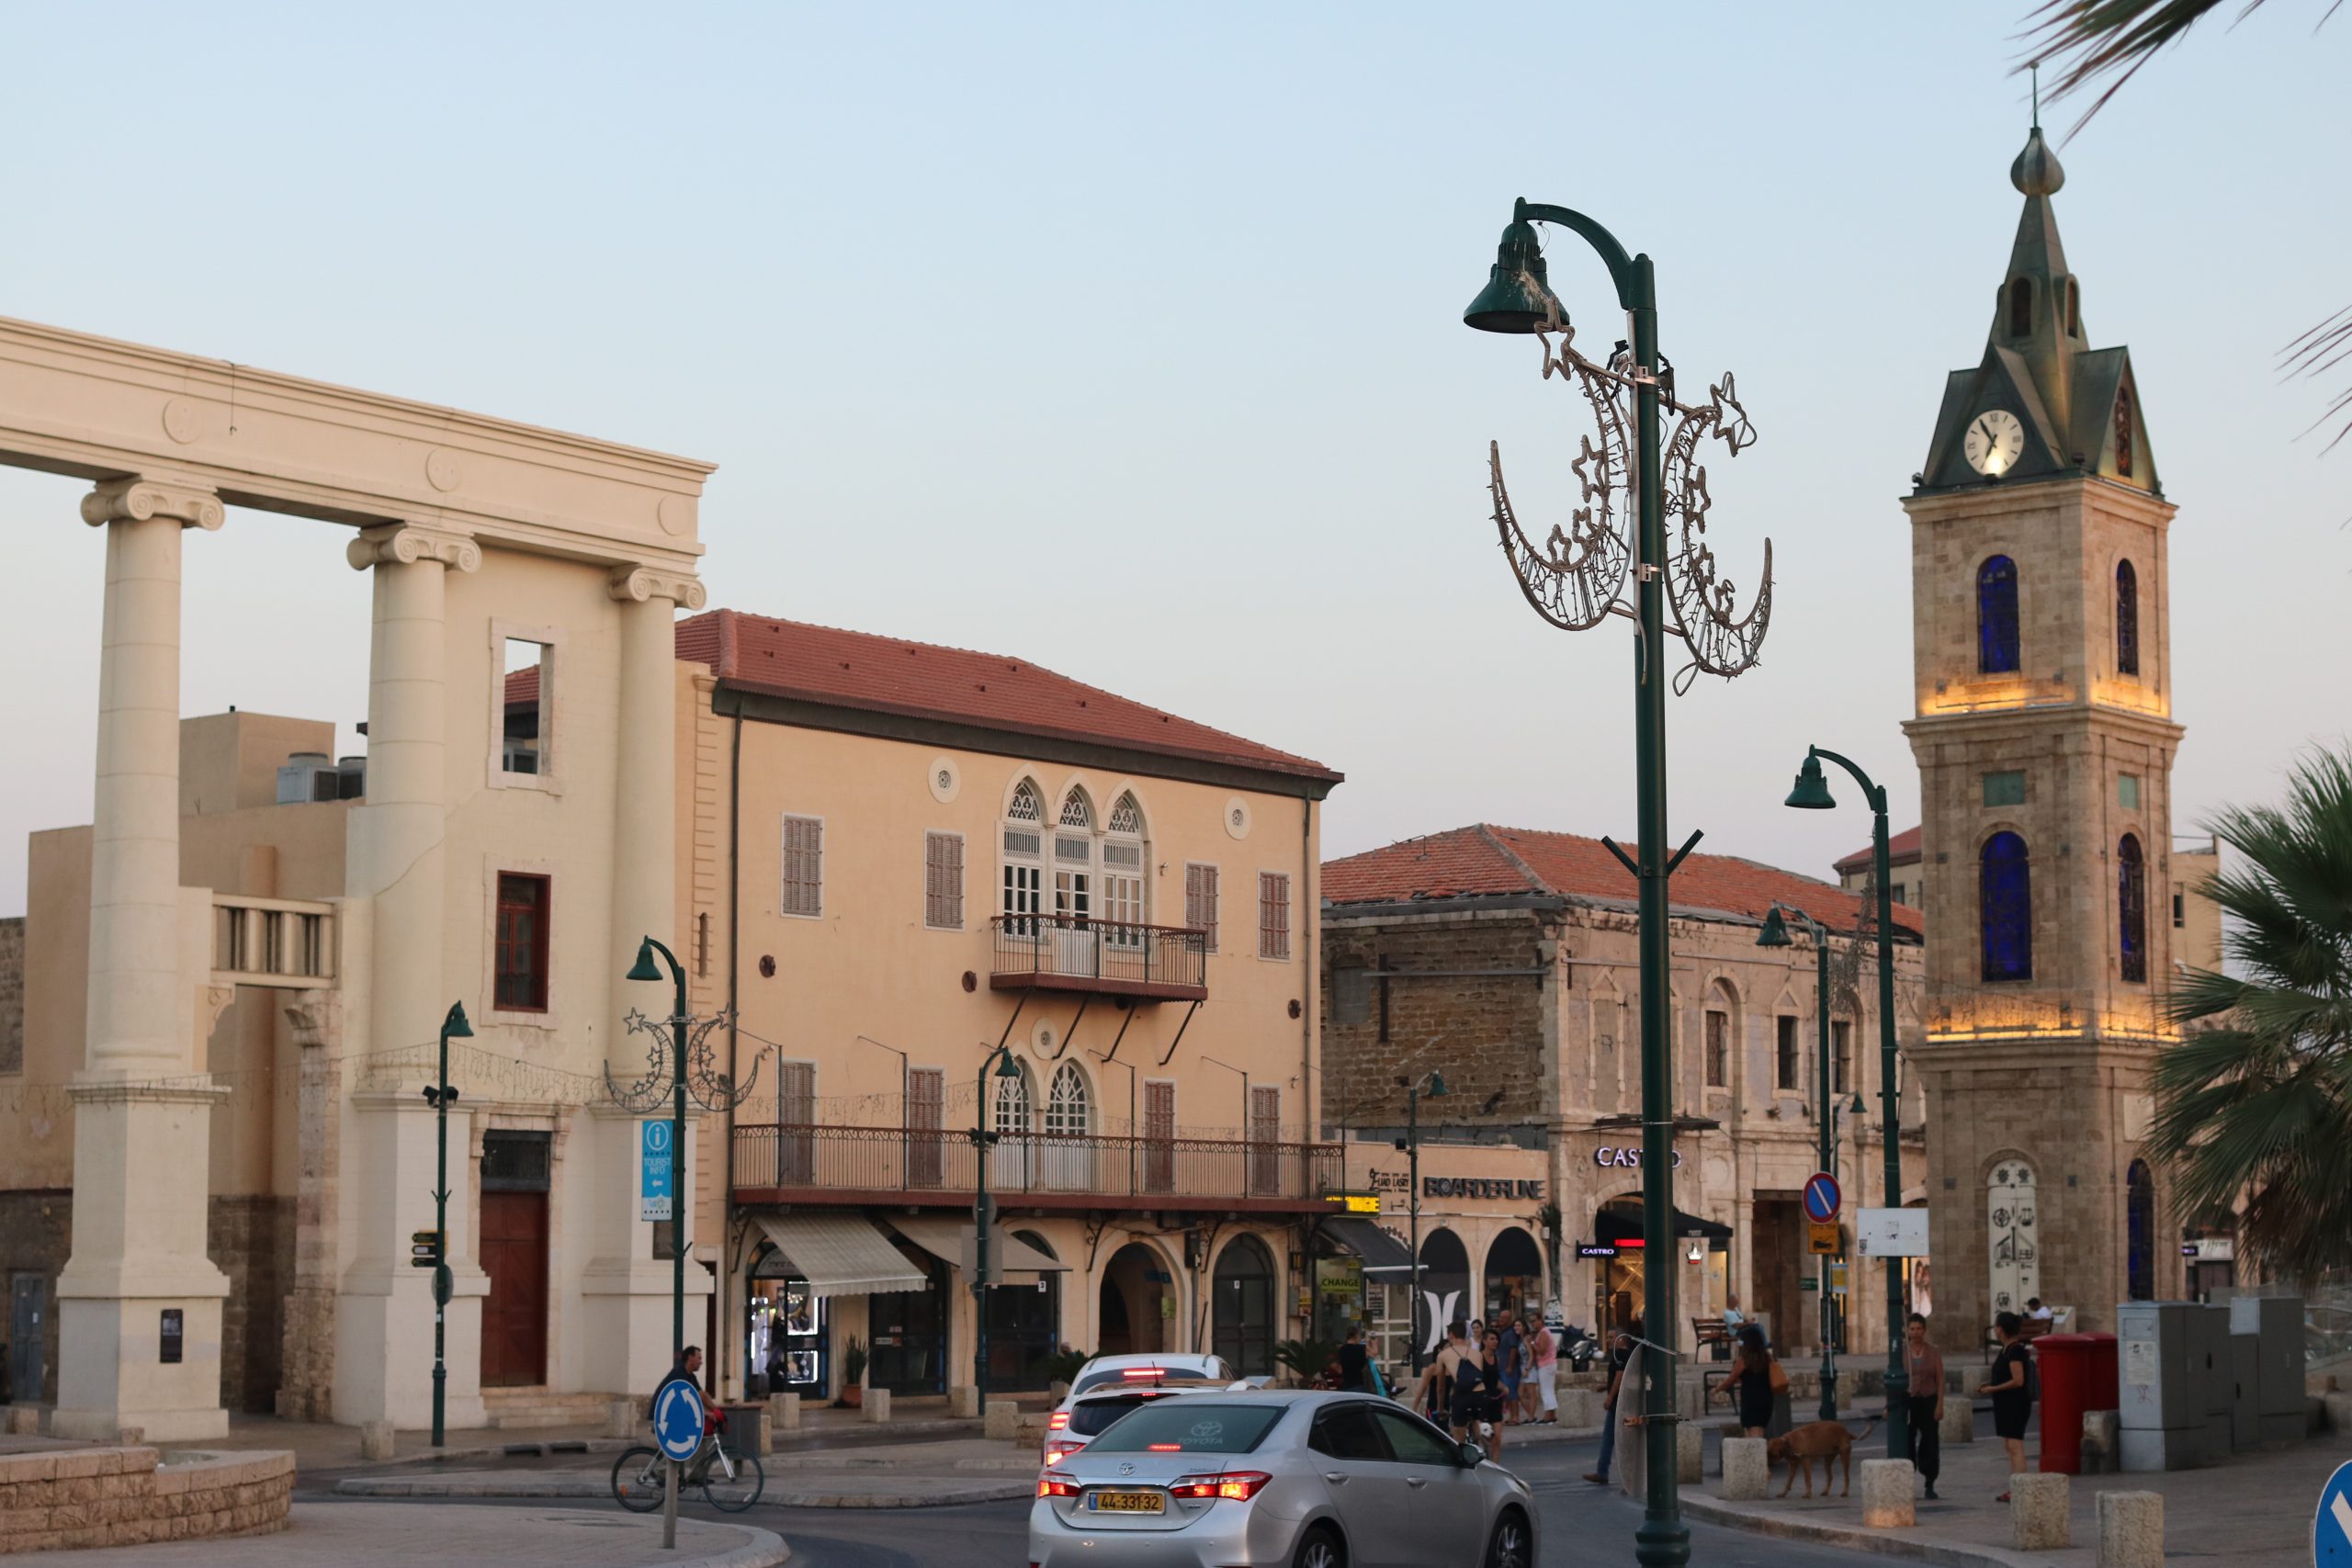 The Jaffa Clock Tower